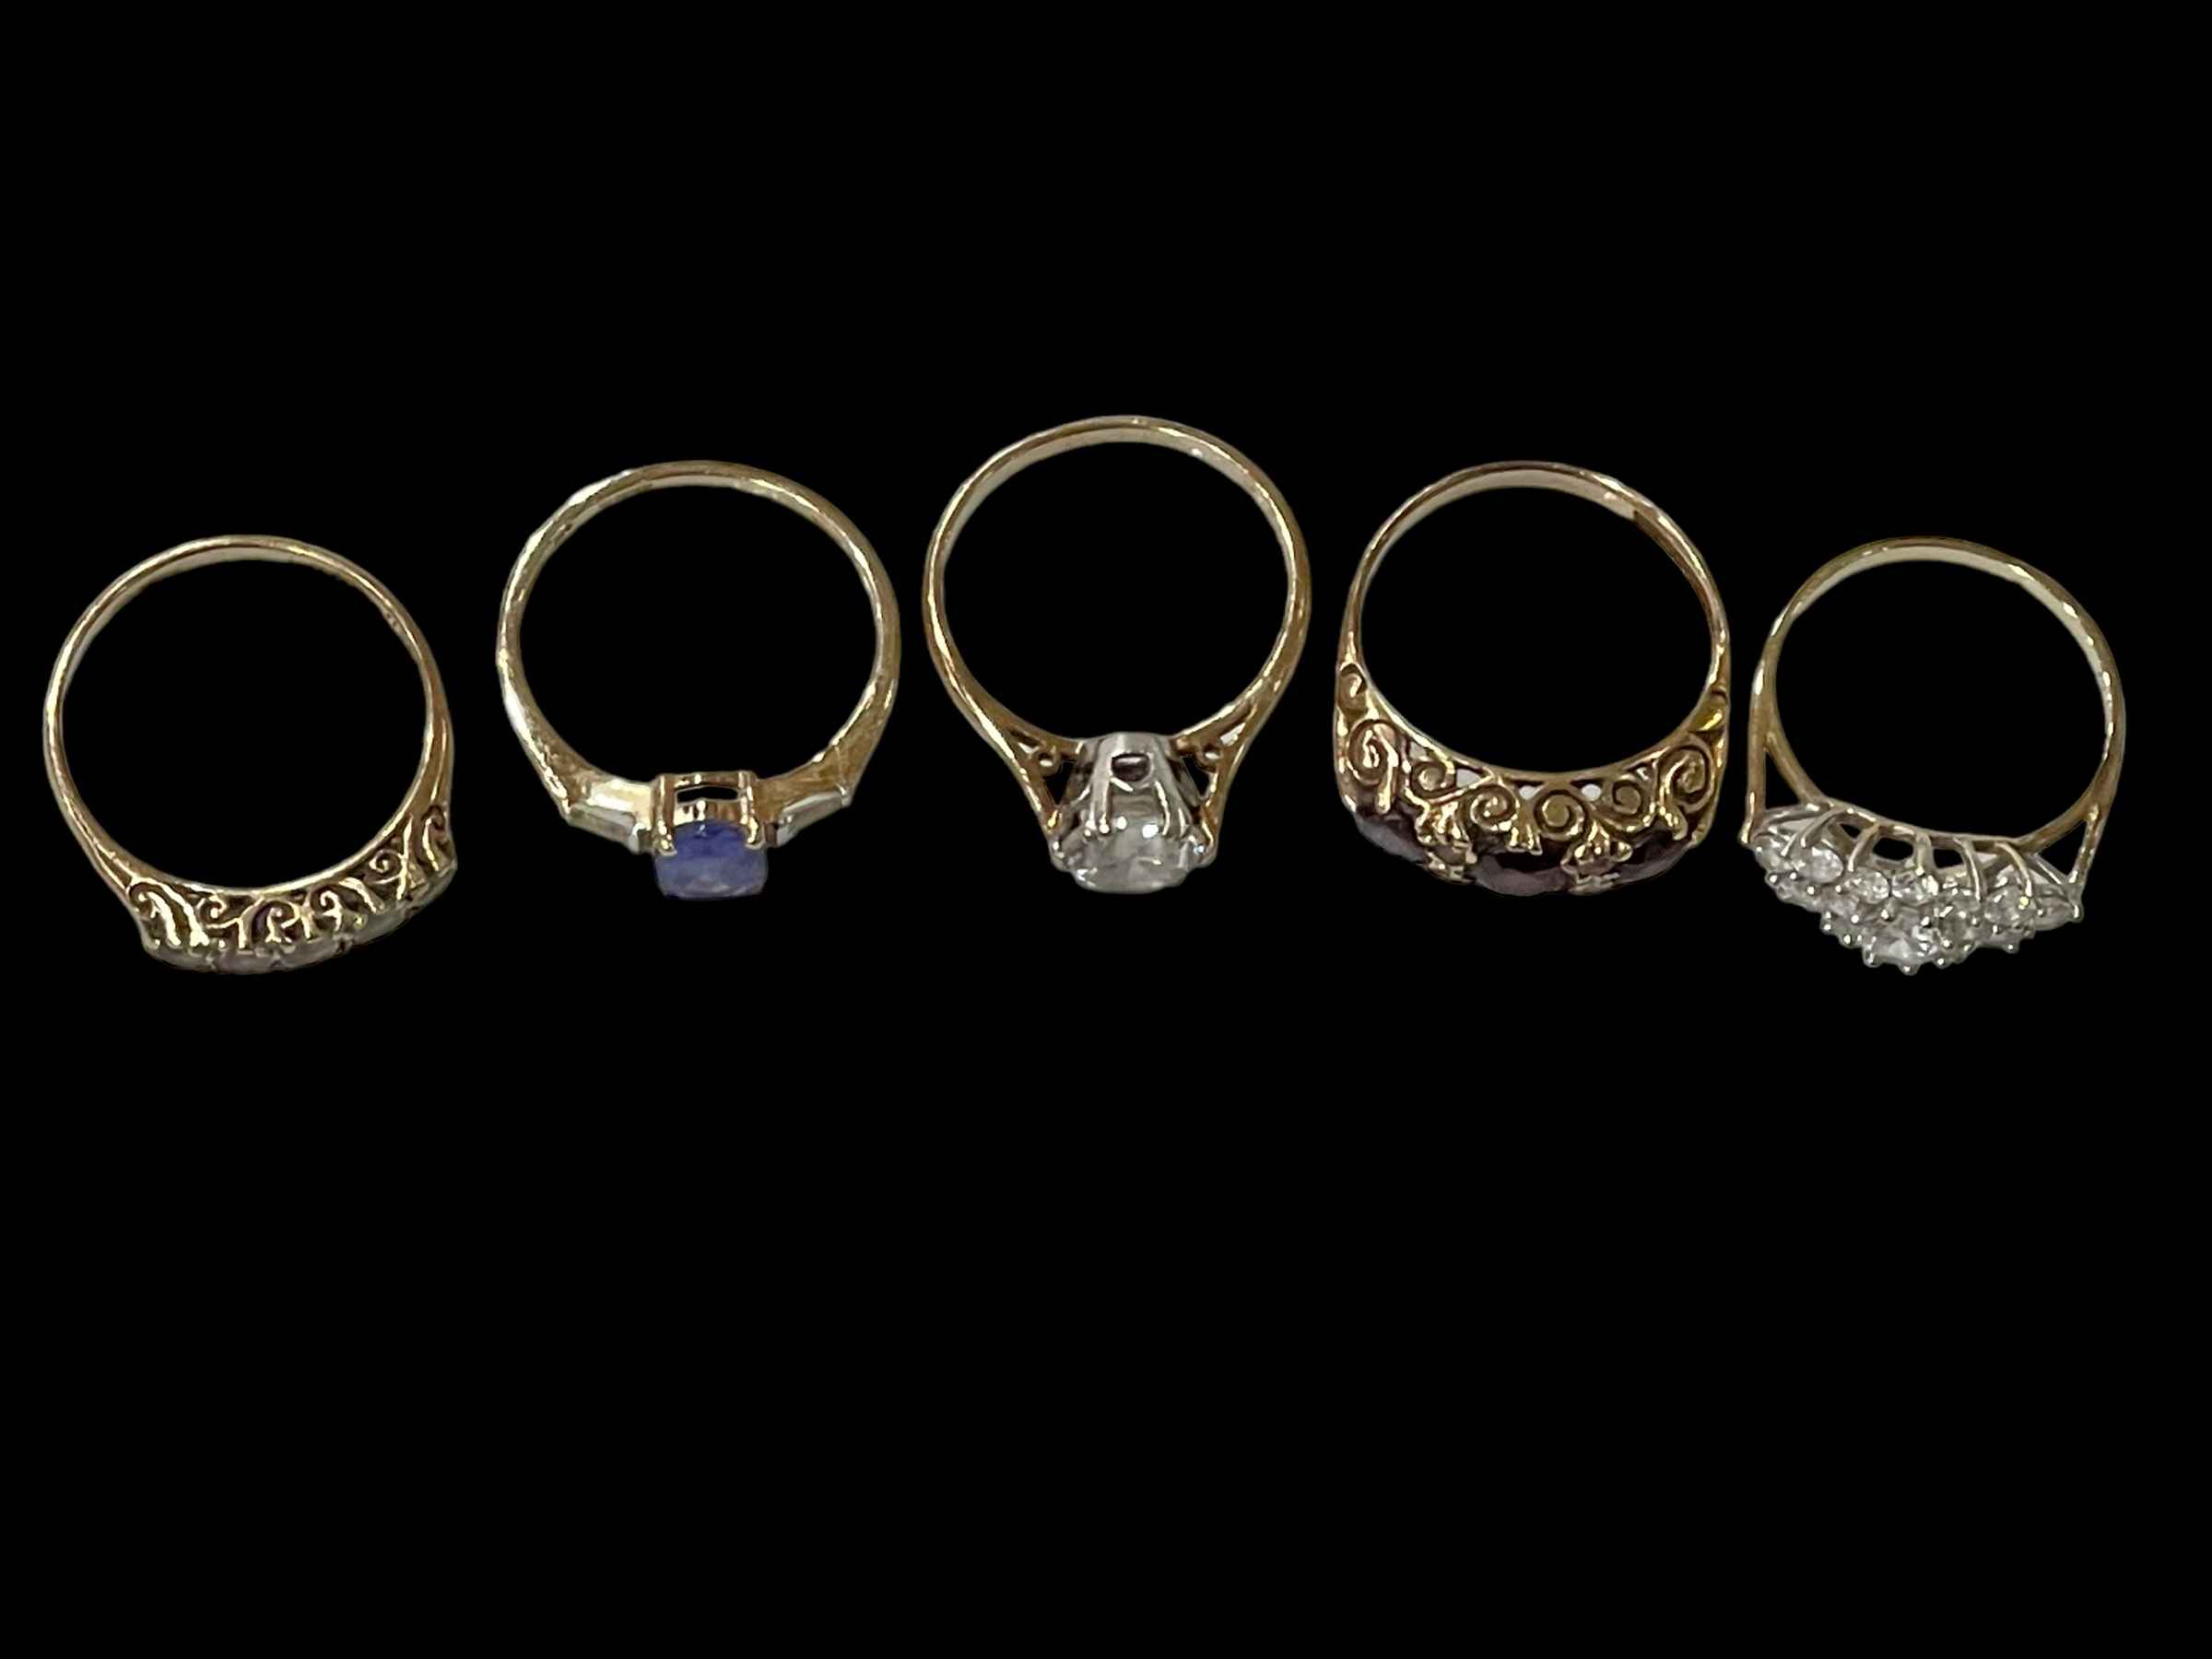 Five 9 carat gold gem set rings. - Image 2 of 2